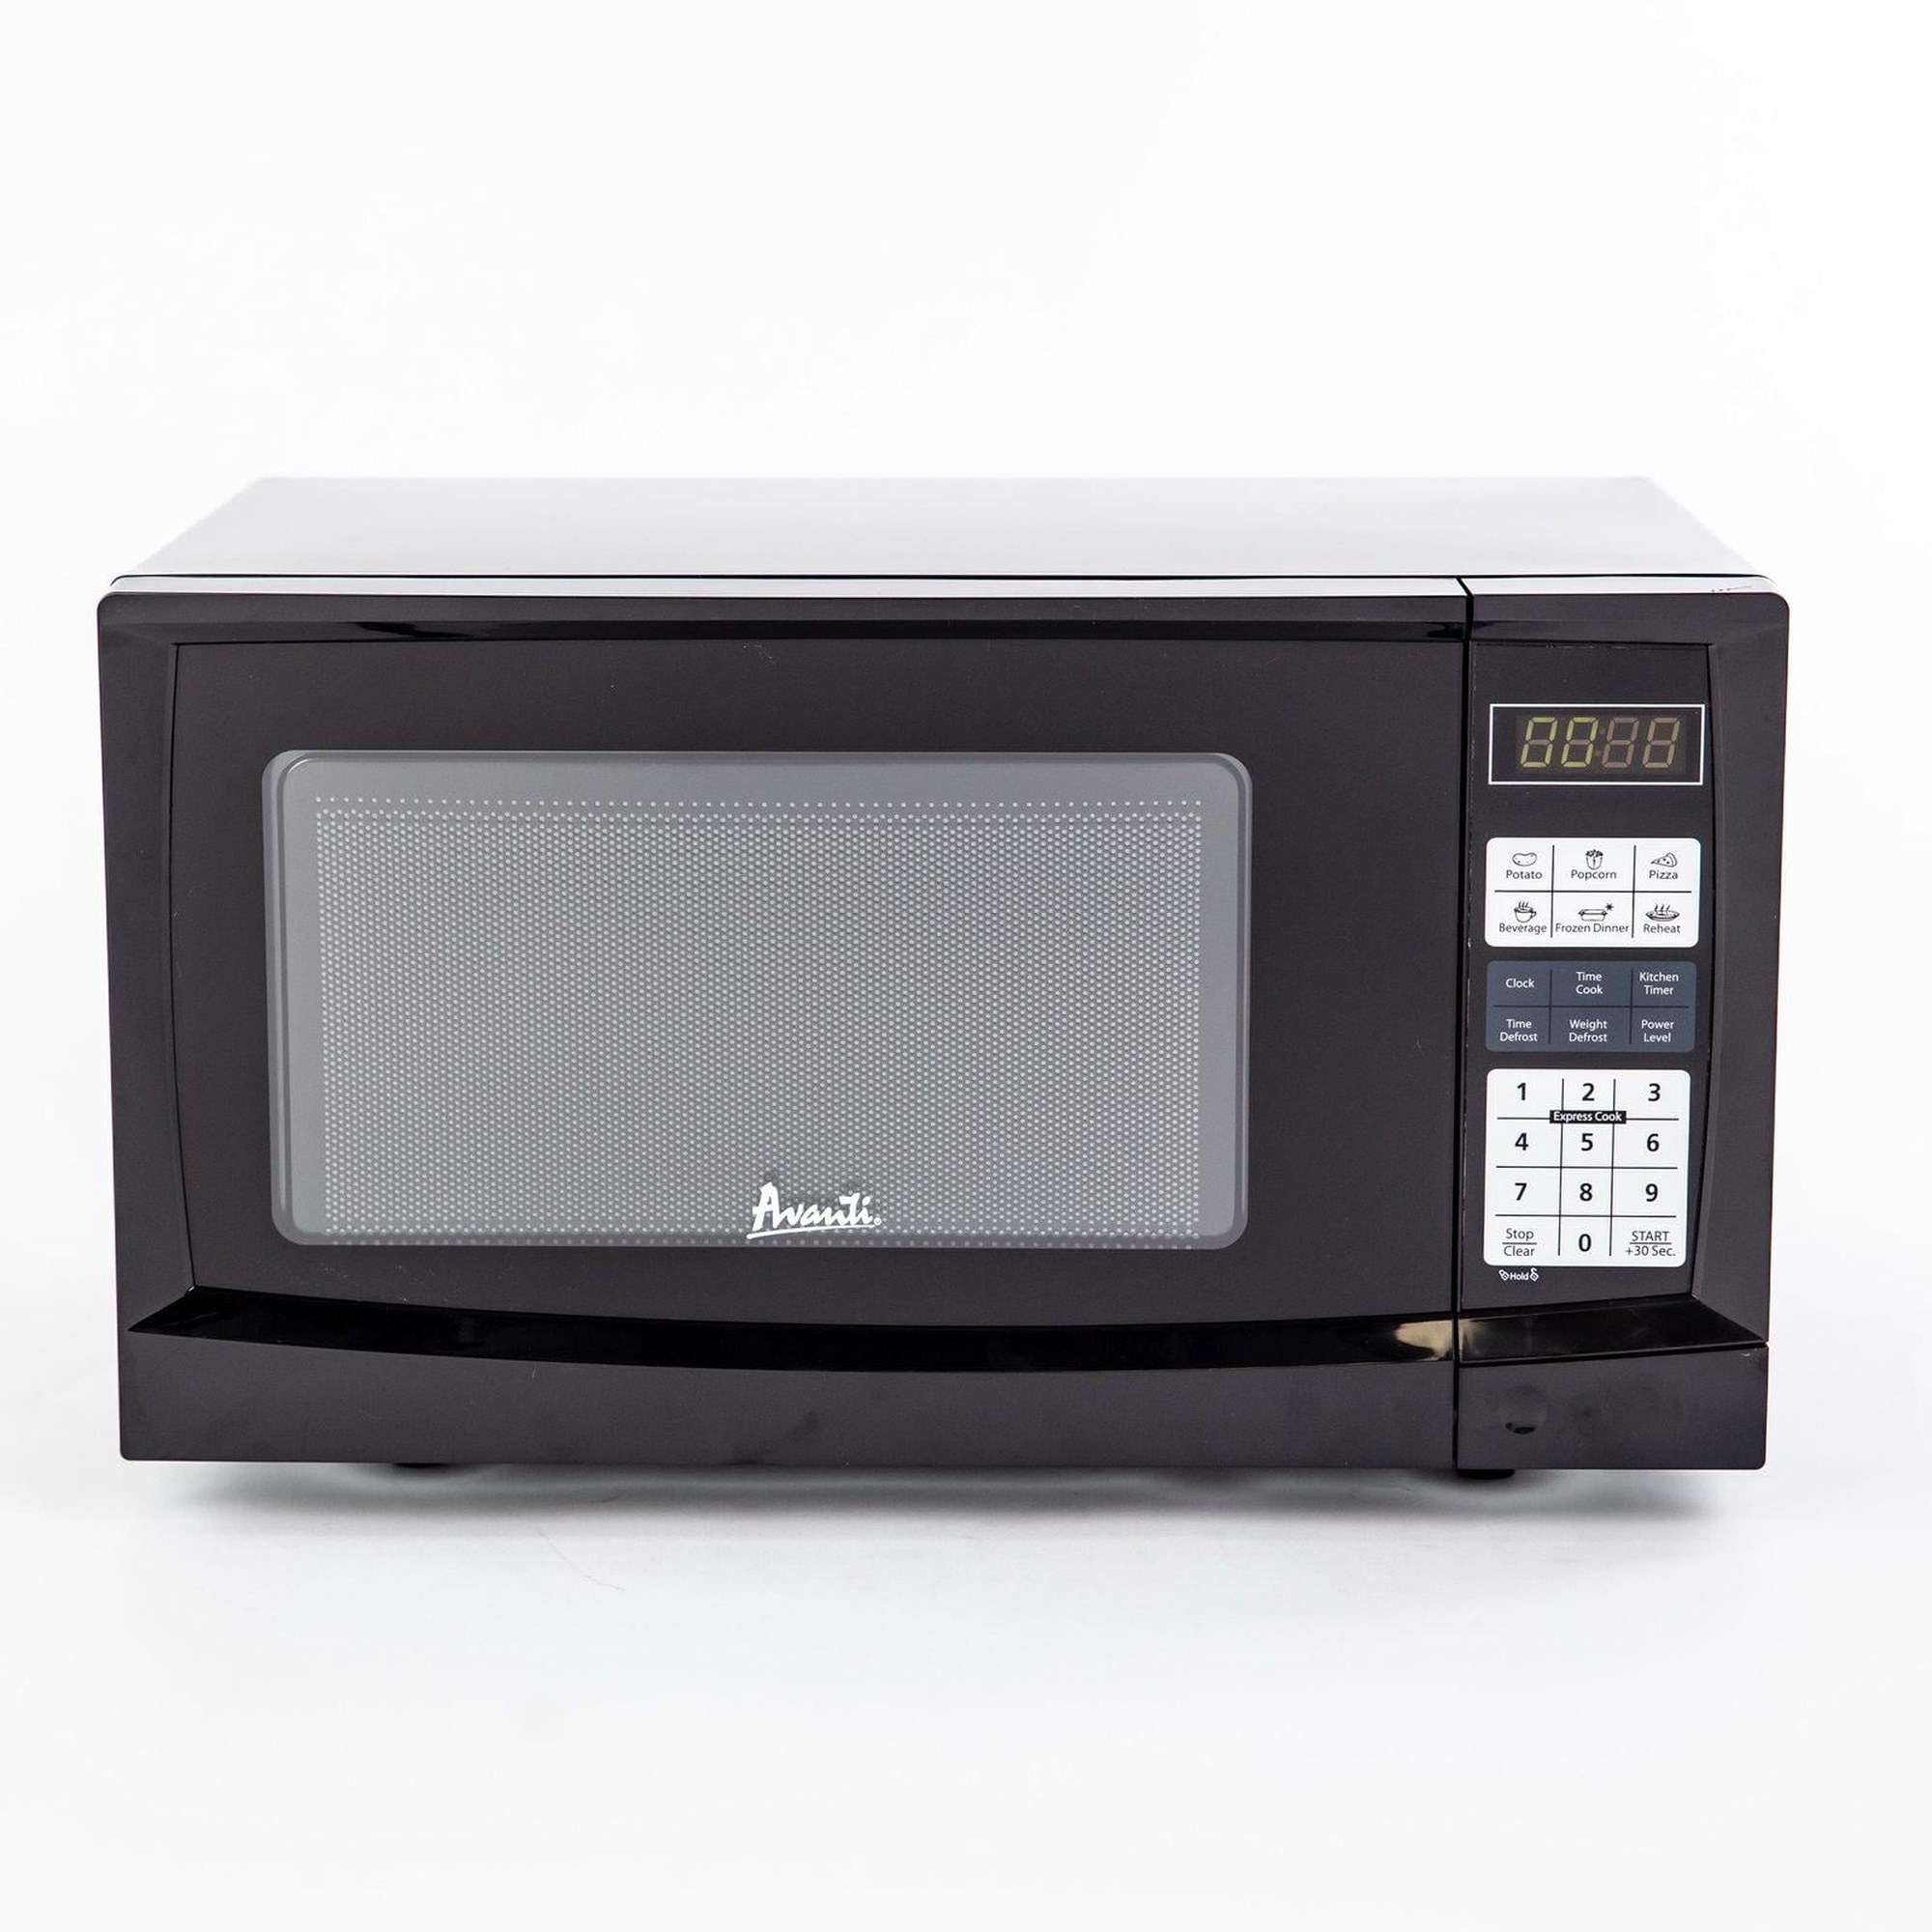 Midea Compact White Microwave - 0.7-cu ft - 700 W